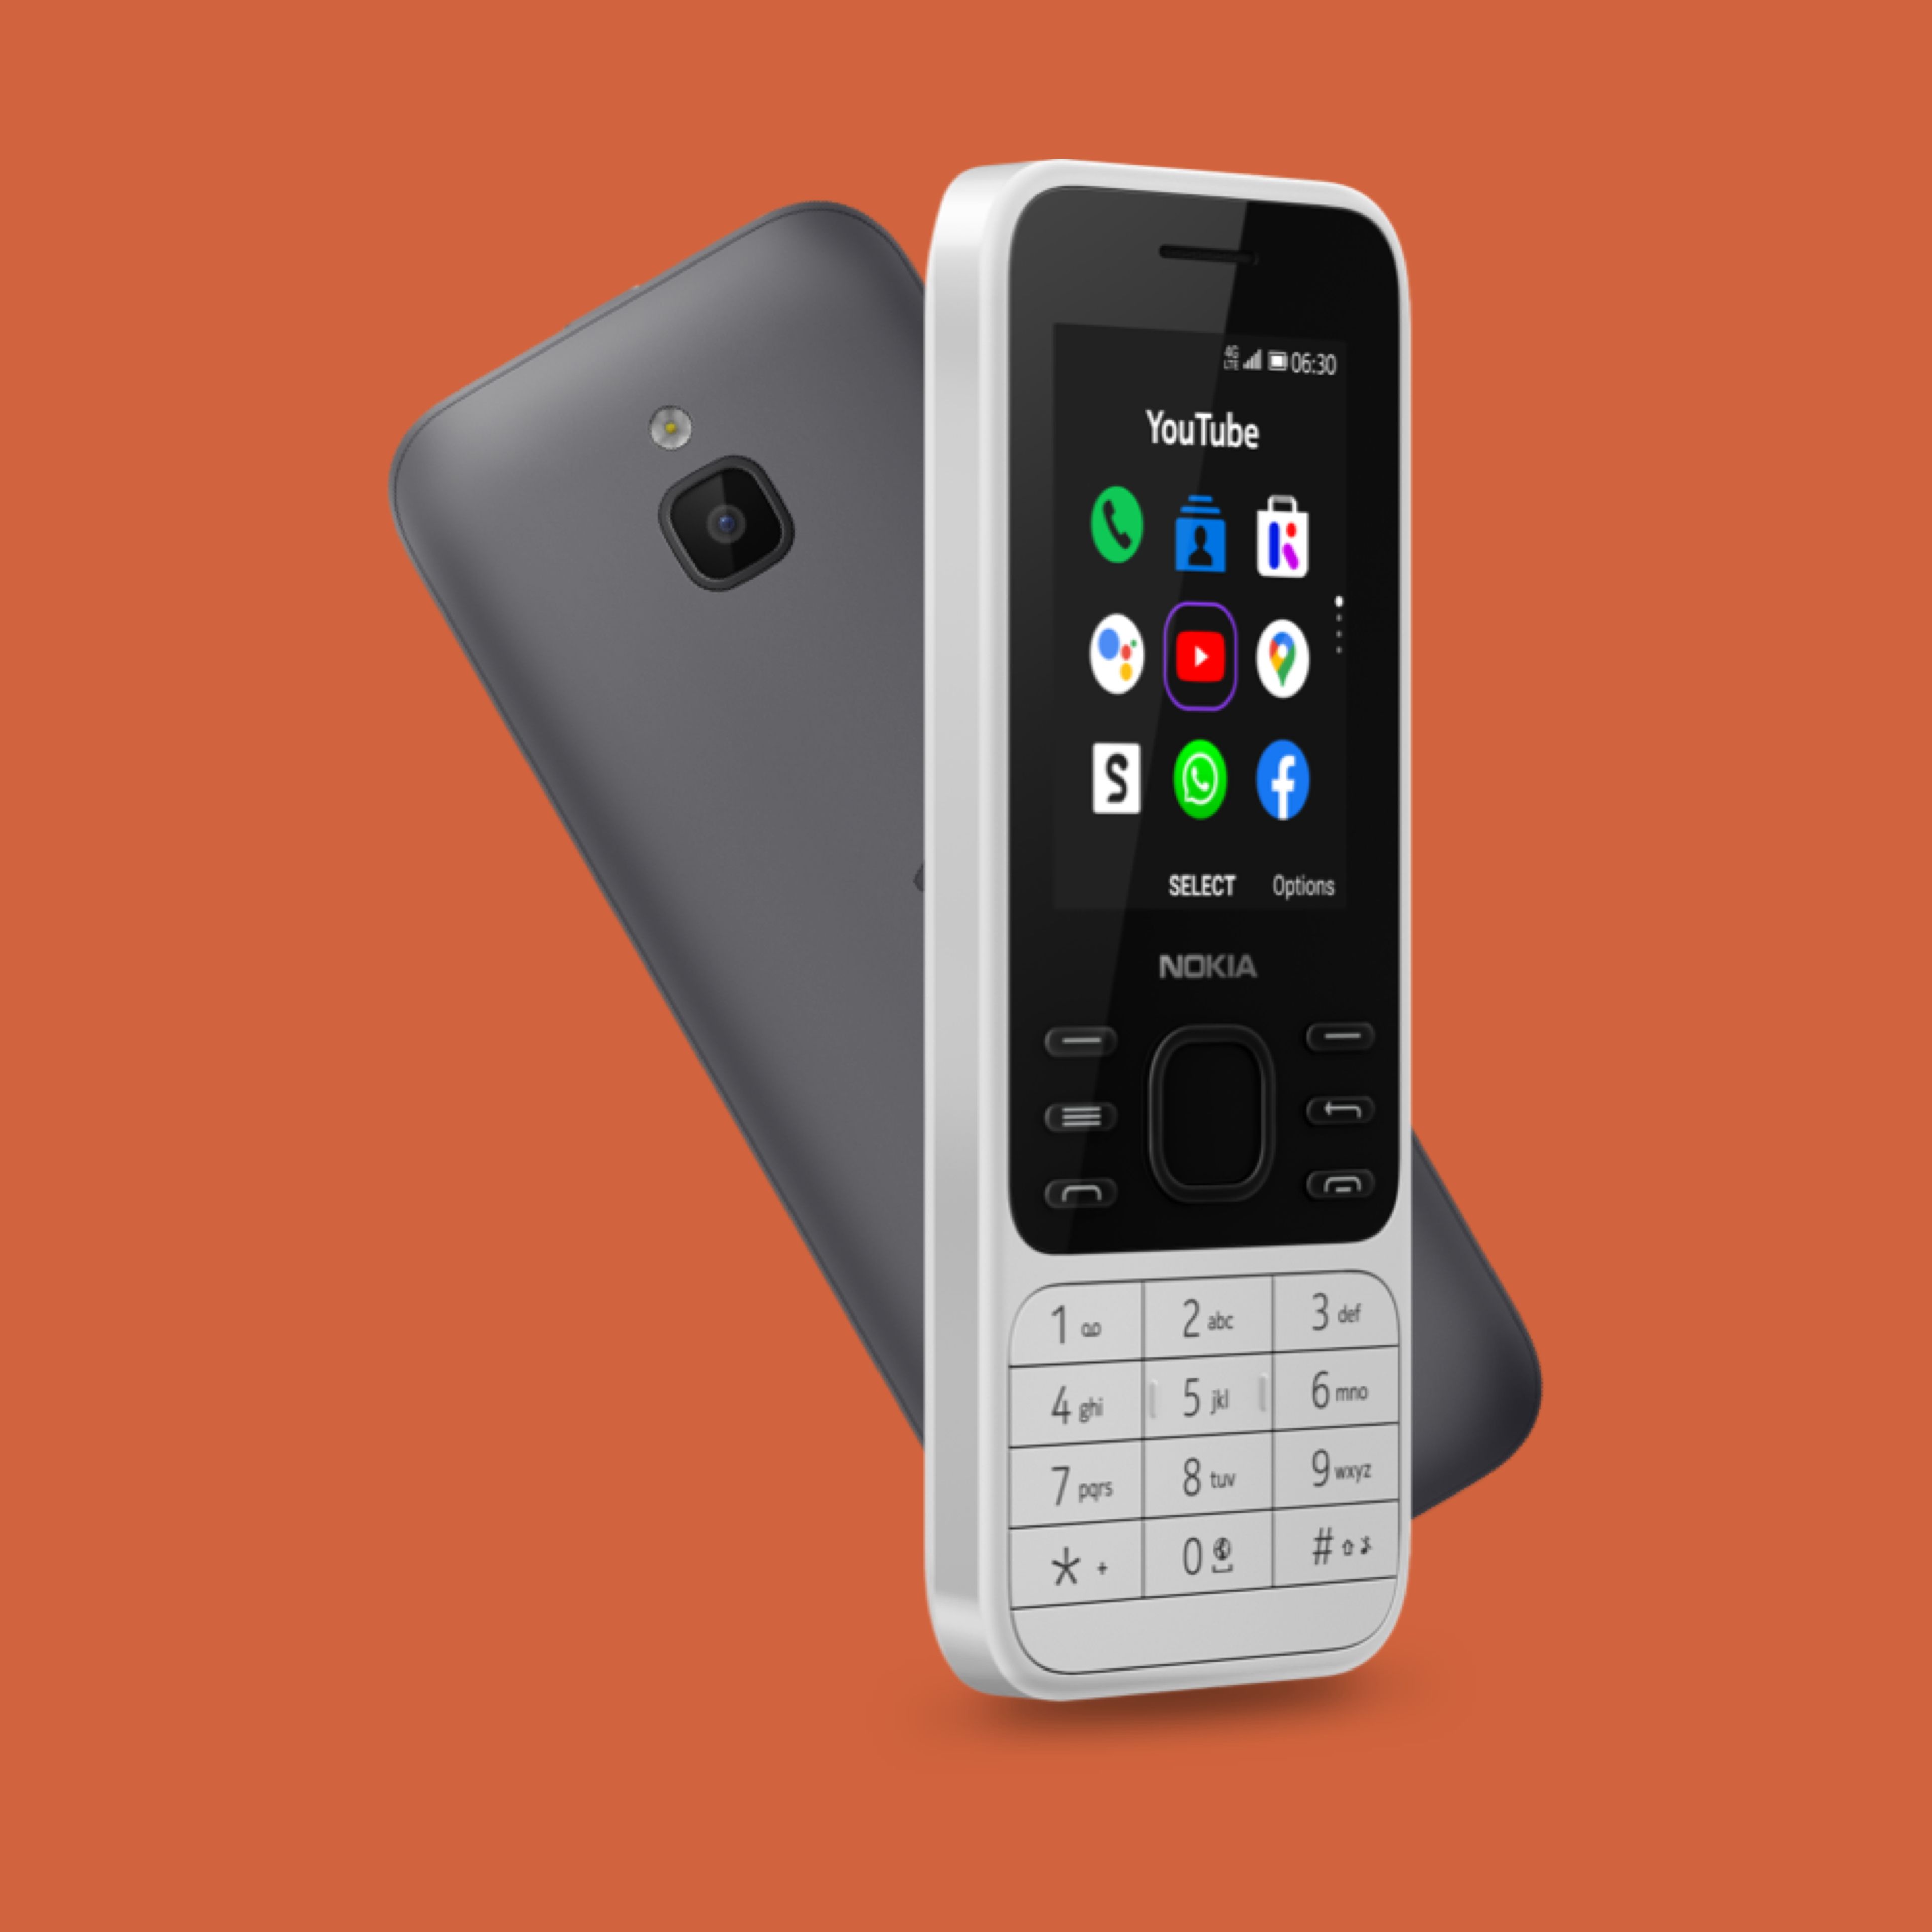 Nokia 6300 4G mobile